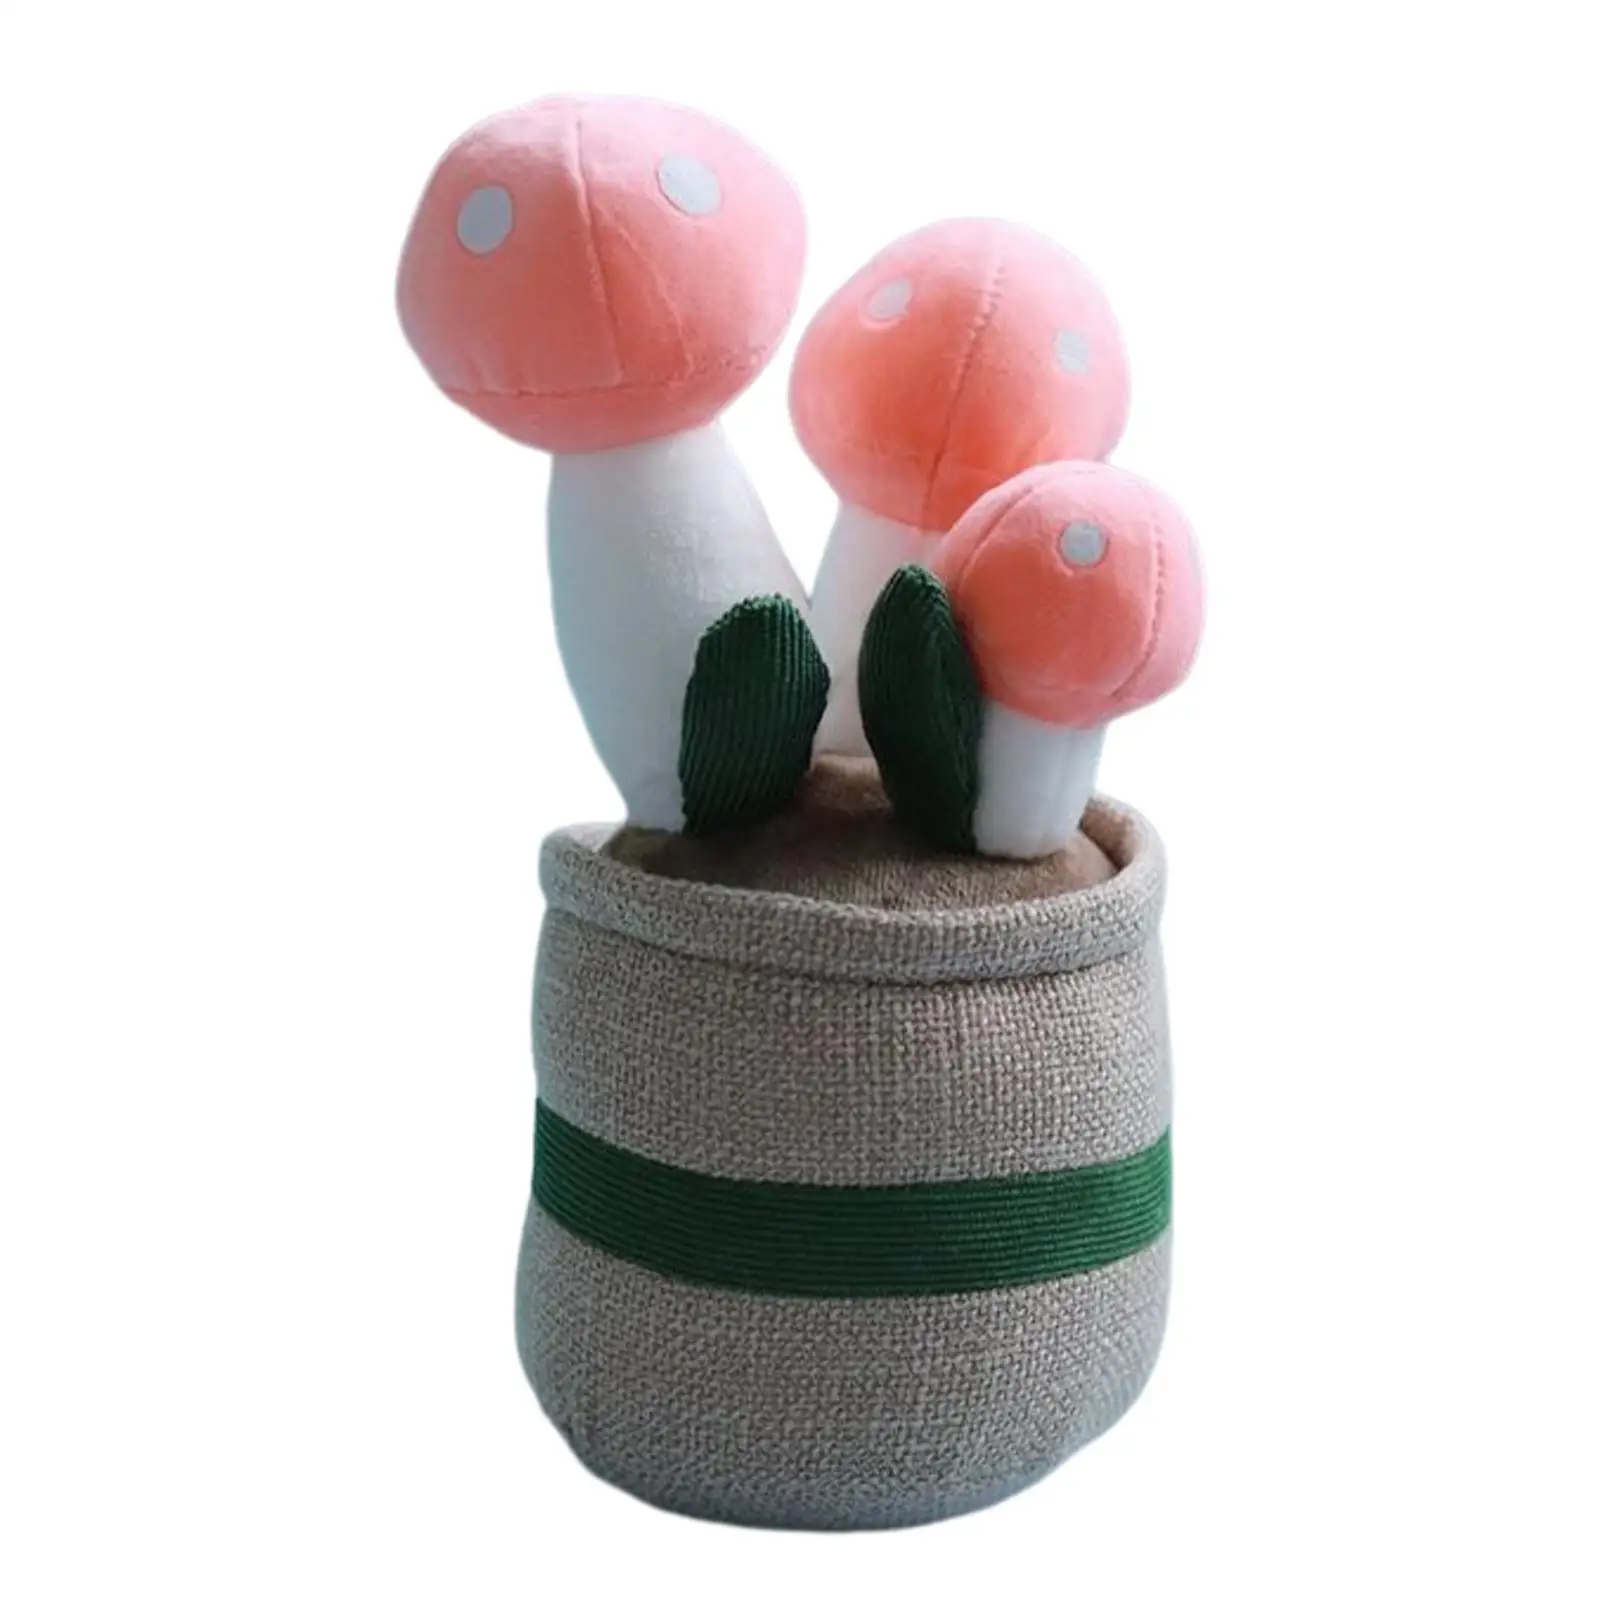 Mushroom Plush Toys Creative for Bedside Table Indoor Bookshelf Decor Living Room